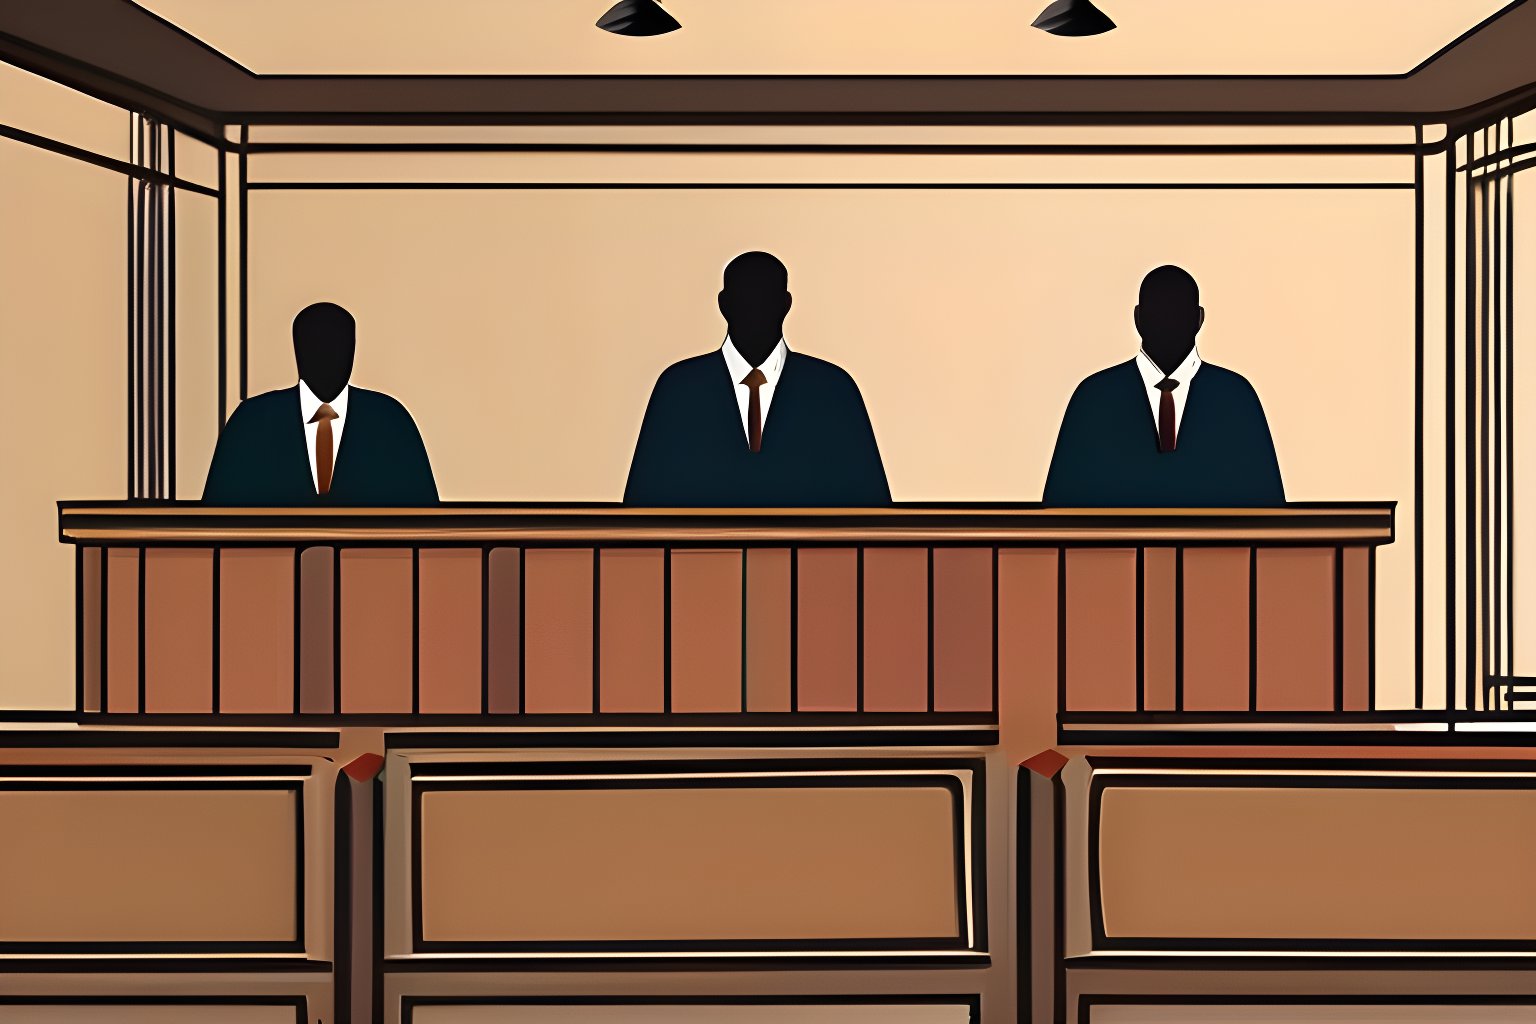 Illustrate 5 Faceless Men in a court room.